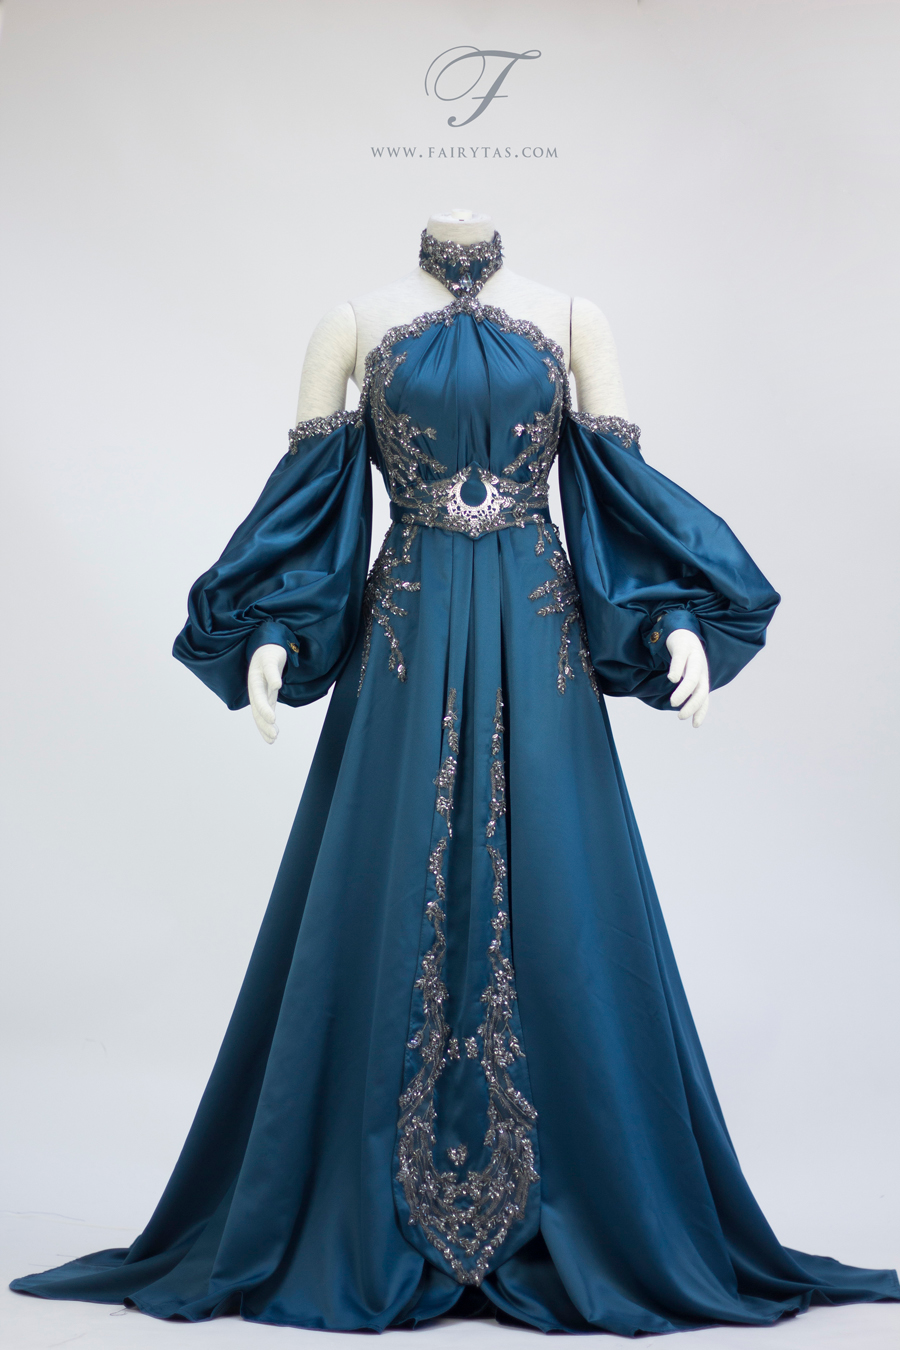 Fairytas - Northern Sky Dress - Fairytas - Northern Sky Dress -   16 beauty Dresses fantasy ideas